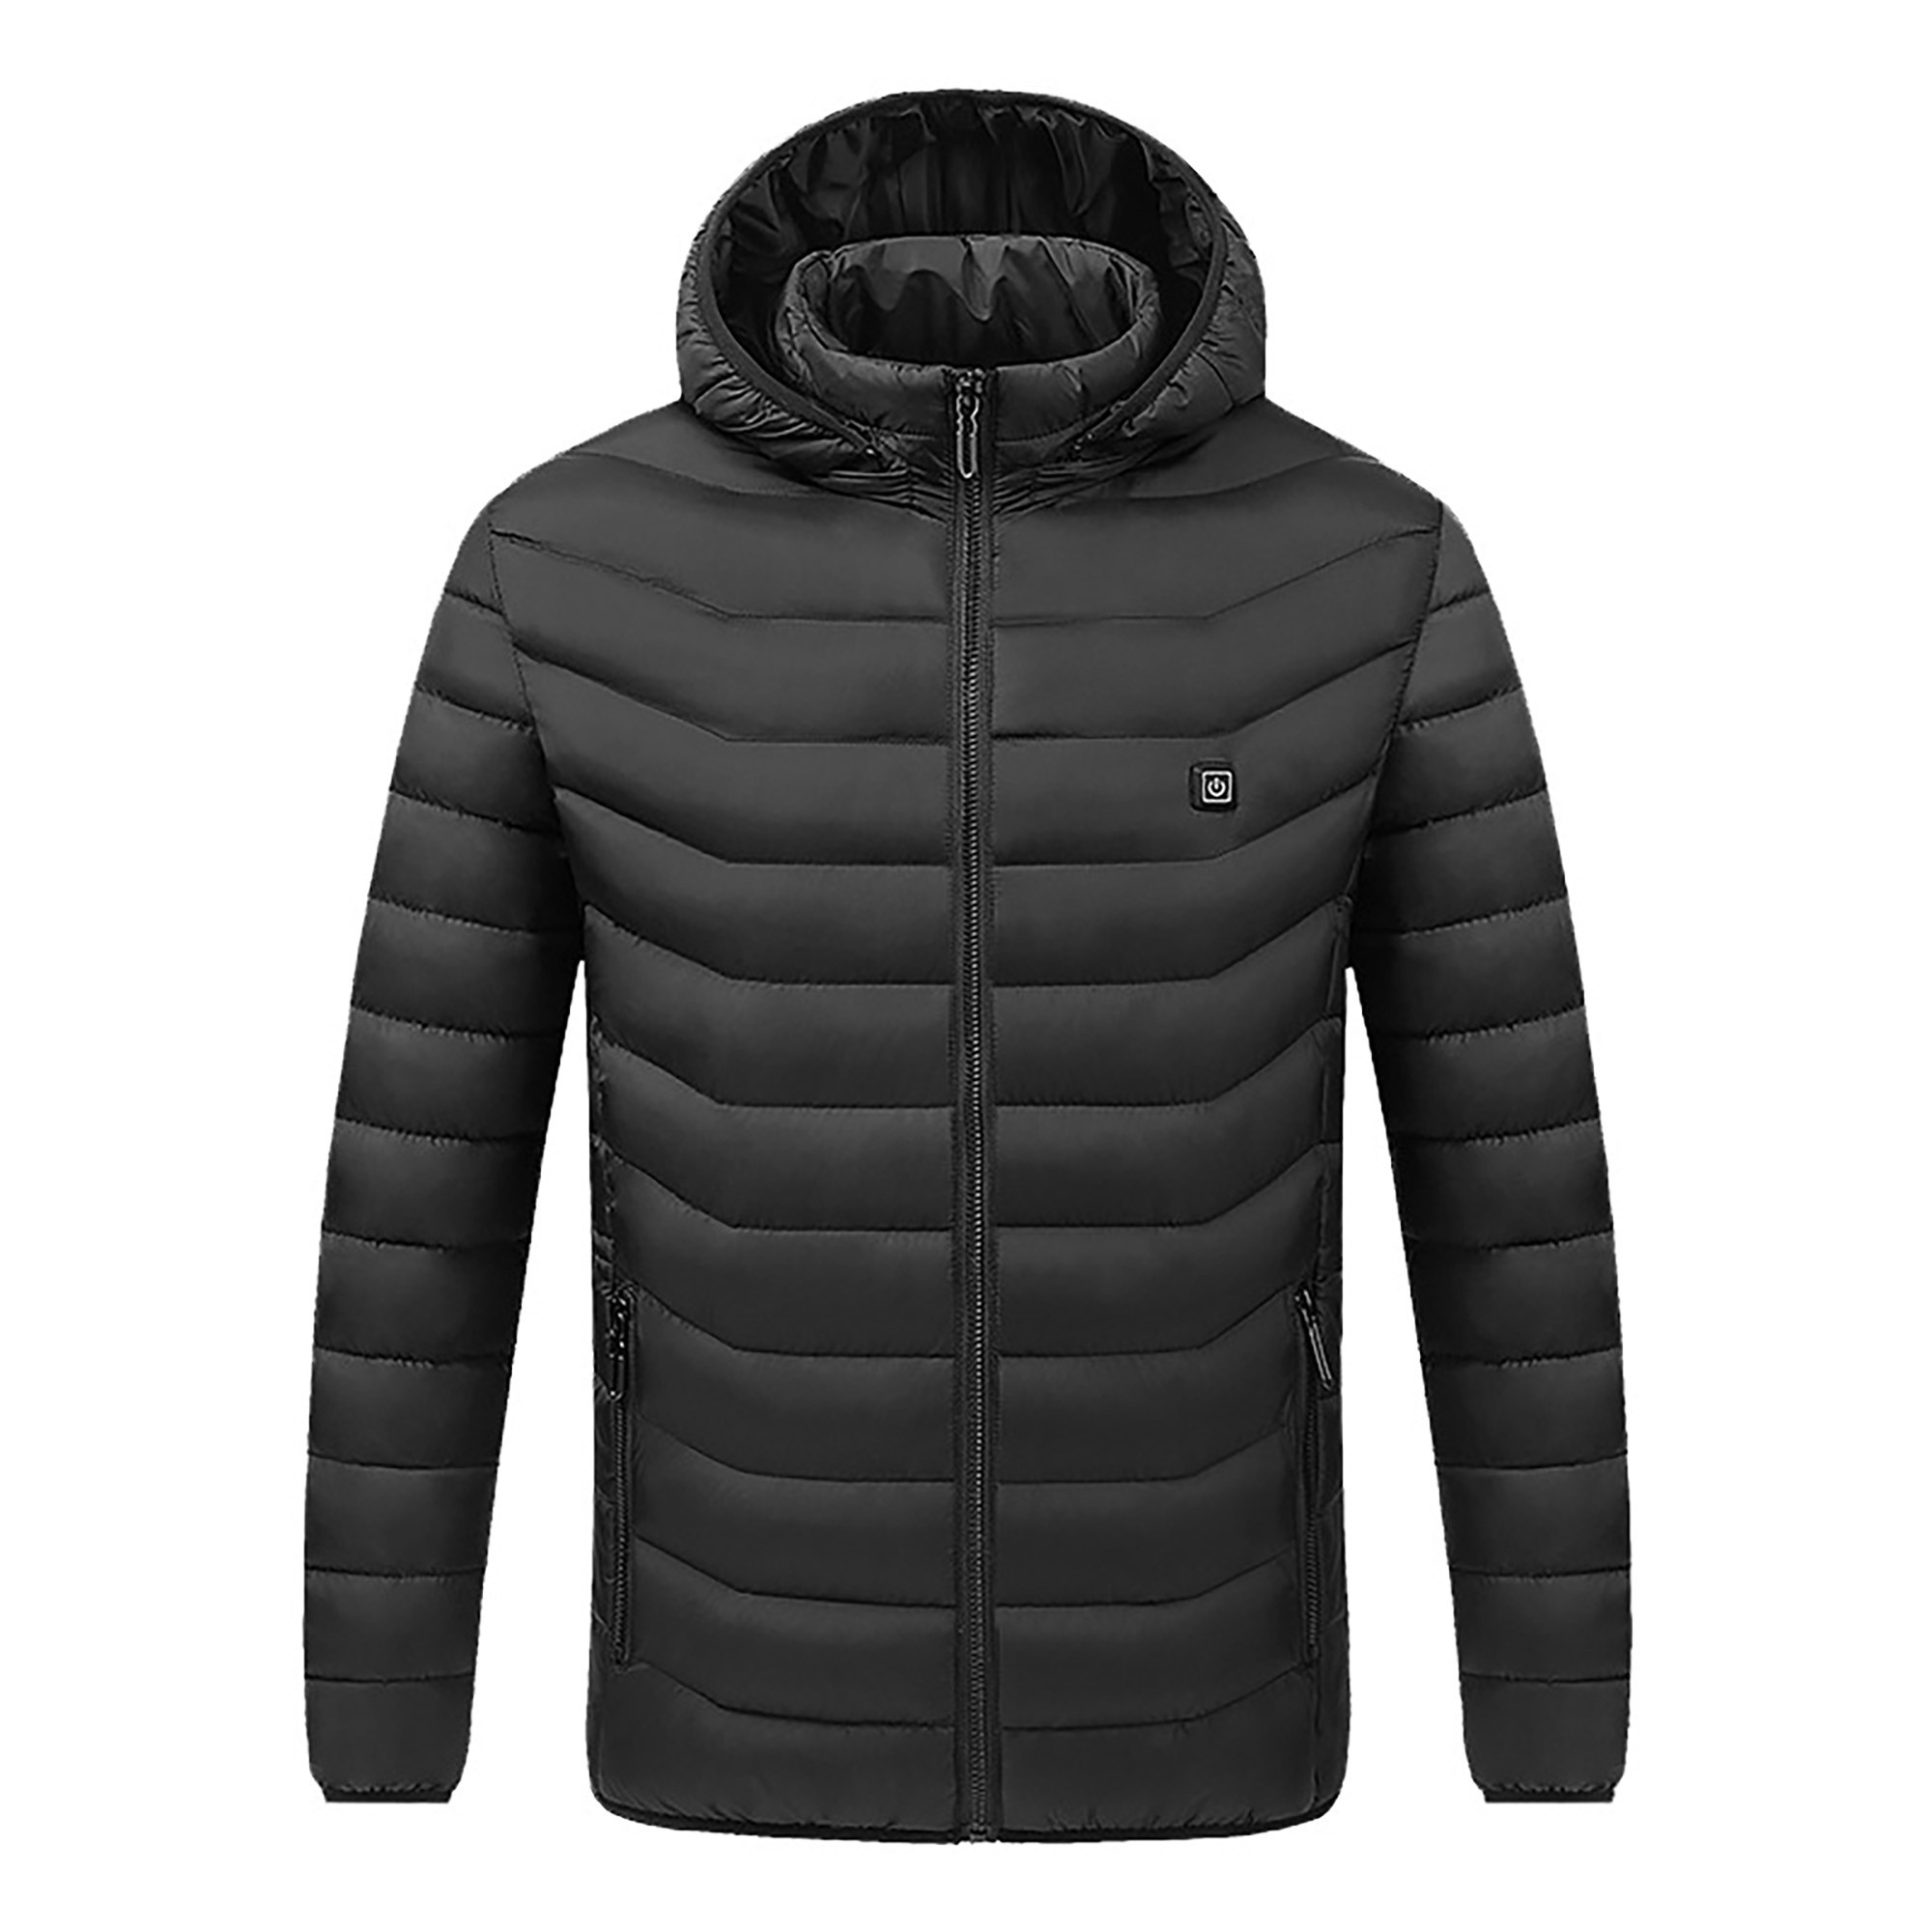 CVLIFE Men's Heated Jacket Full Zip with Detachable Hood (Power Bank is Not Included) Winter Body Warmer Unisex Women Lightweight Heating Coat Clothing - image 3 of 4